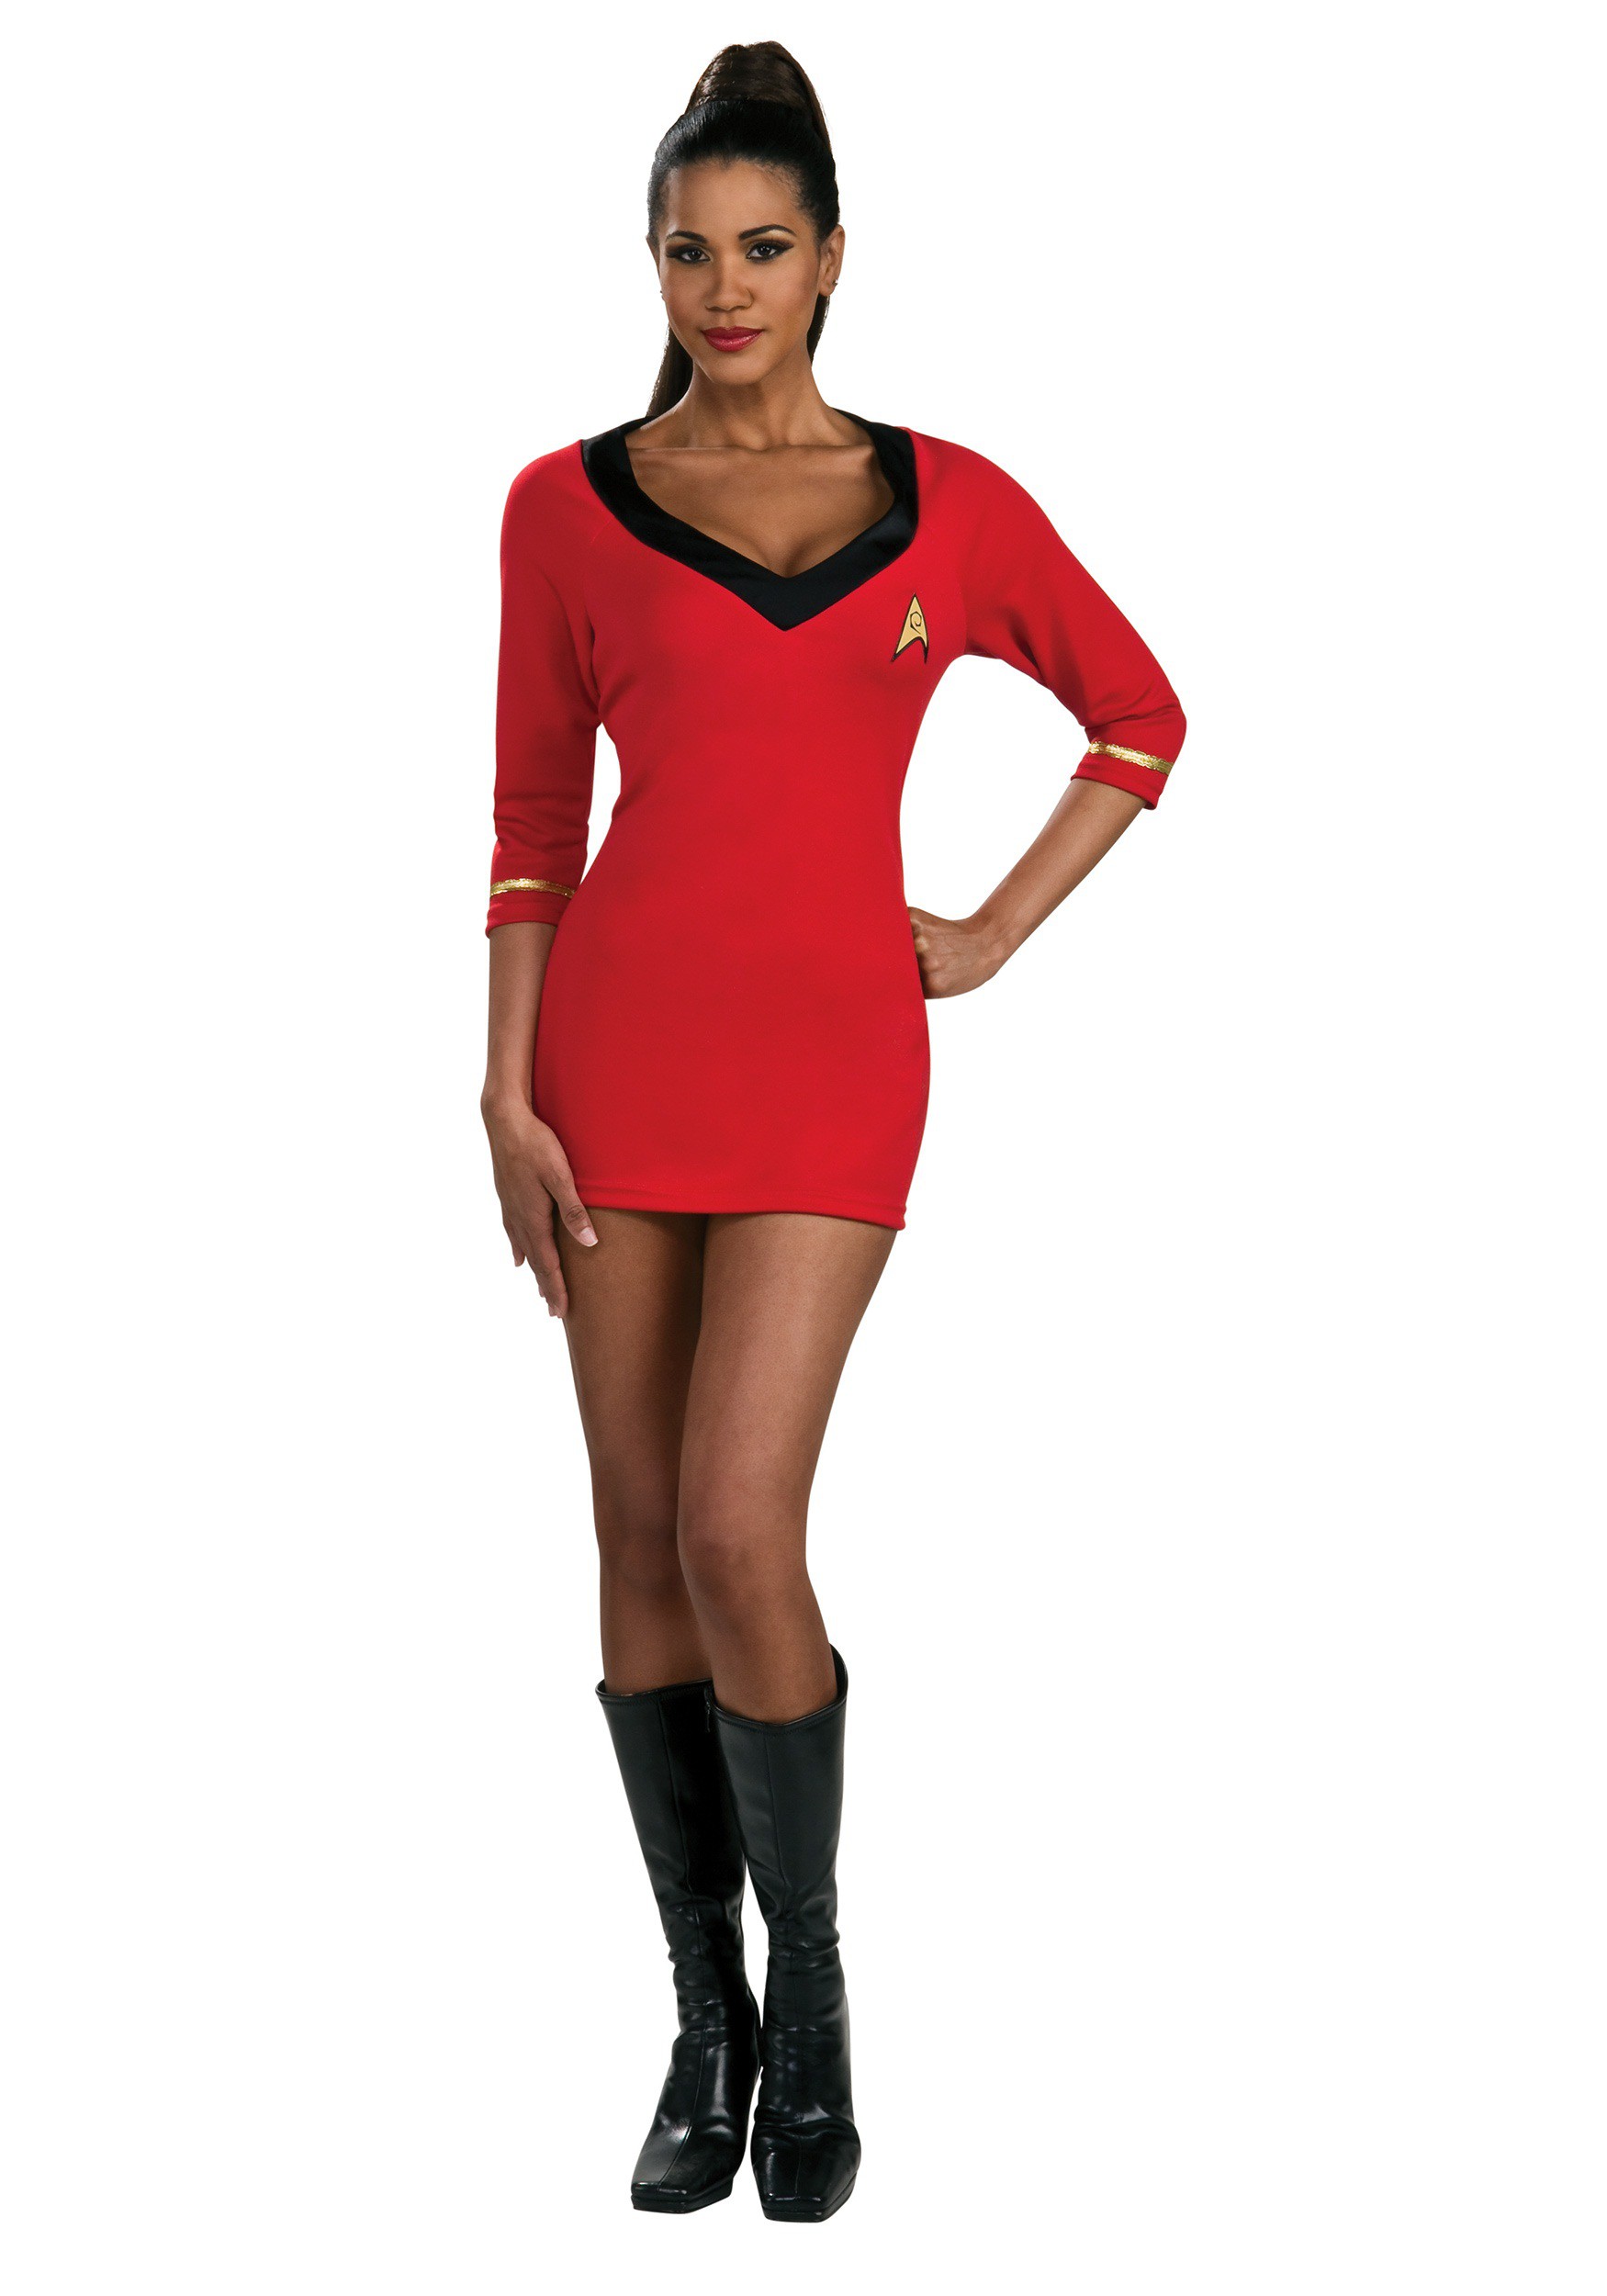 Score Hilarious twin Classic Star Trek Secret Wishes Uhura Costume